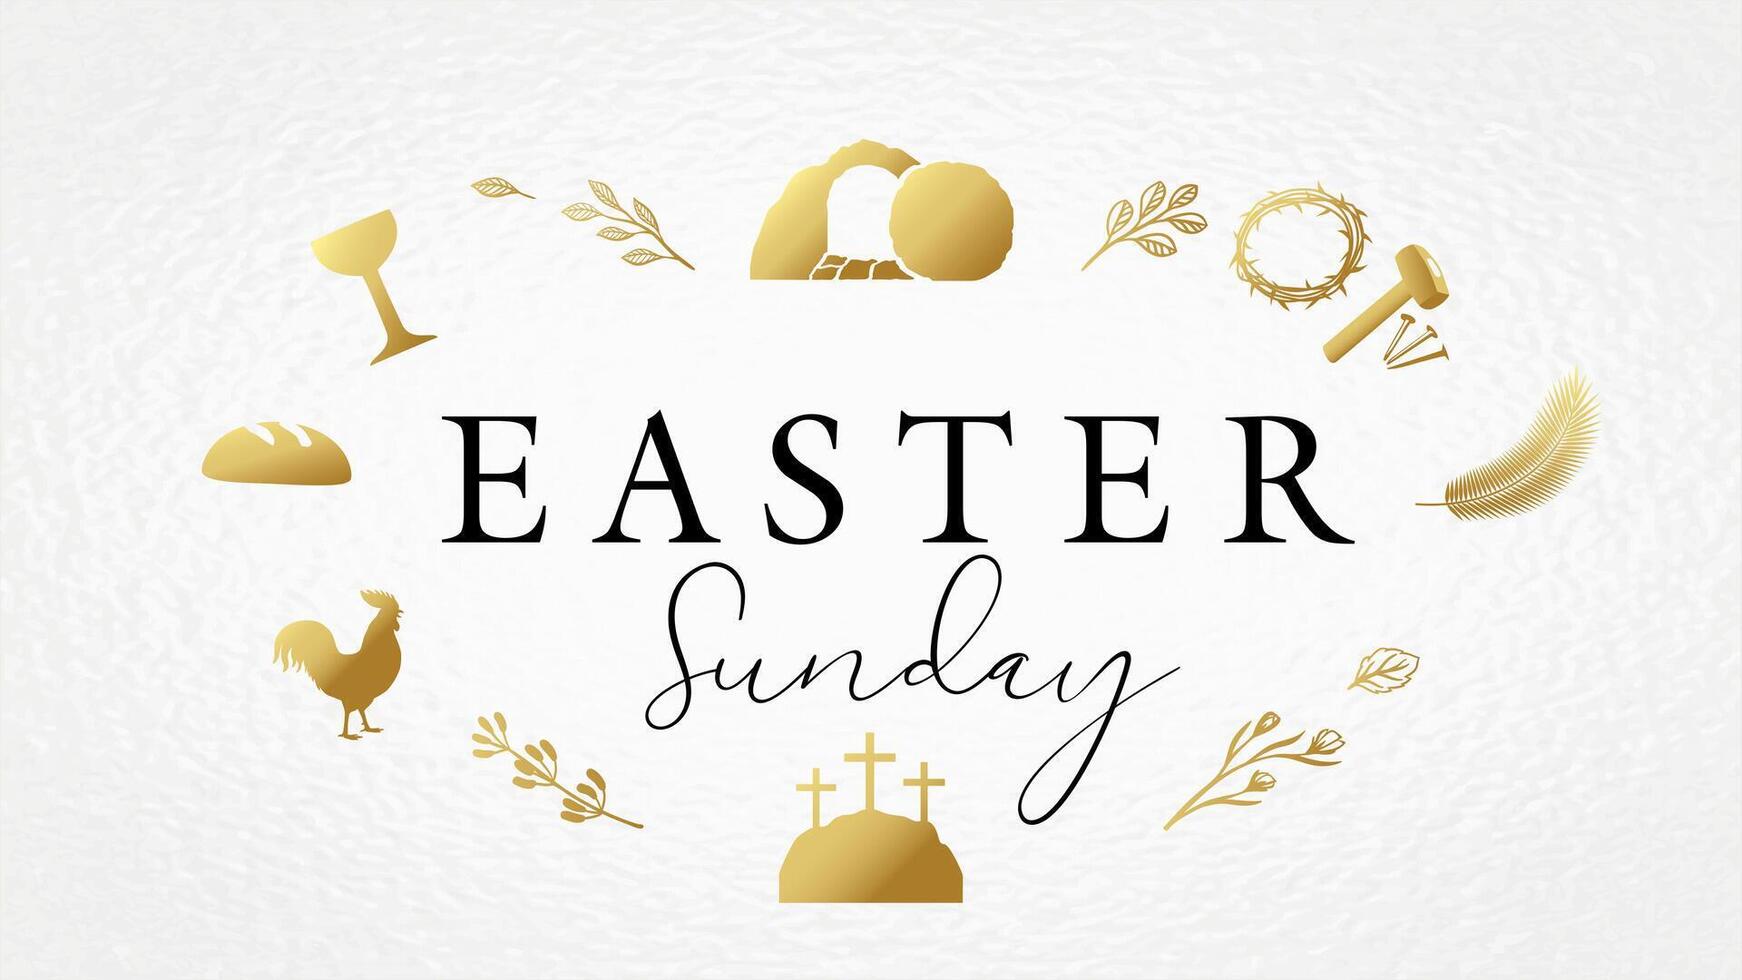 Church service invitation concept. Easter Sunday celebration vector